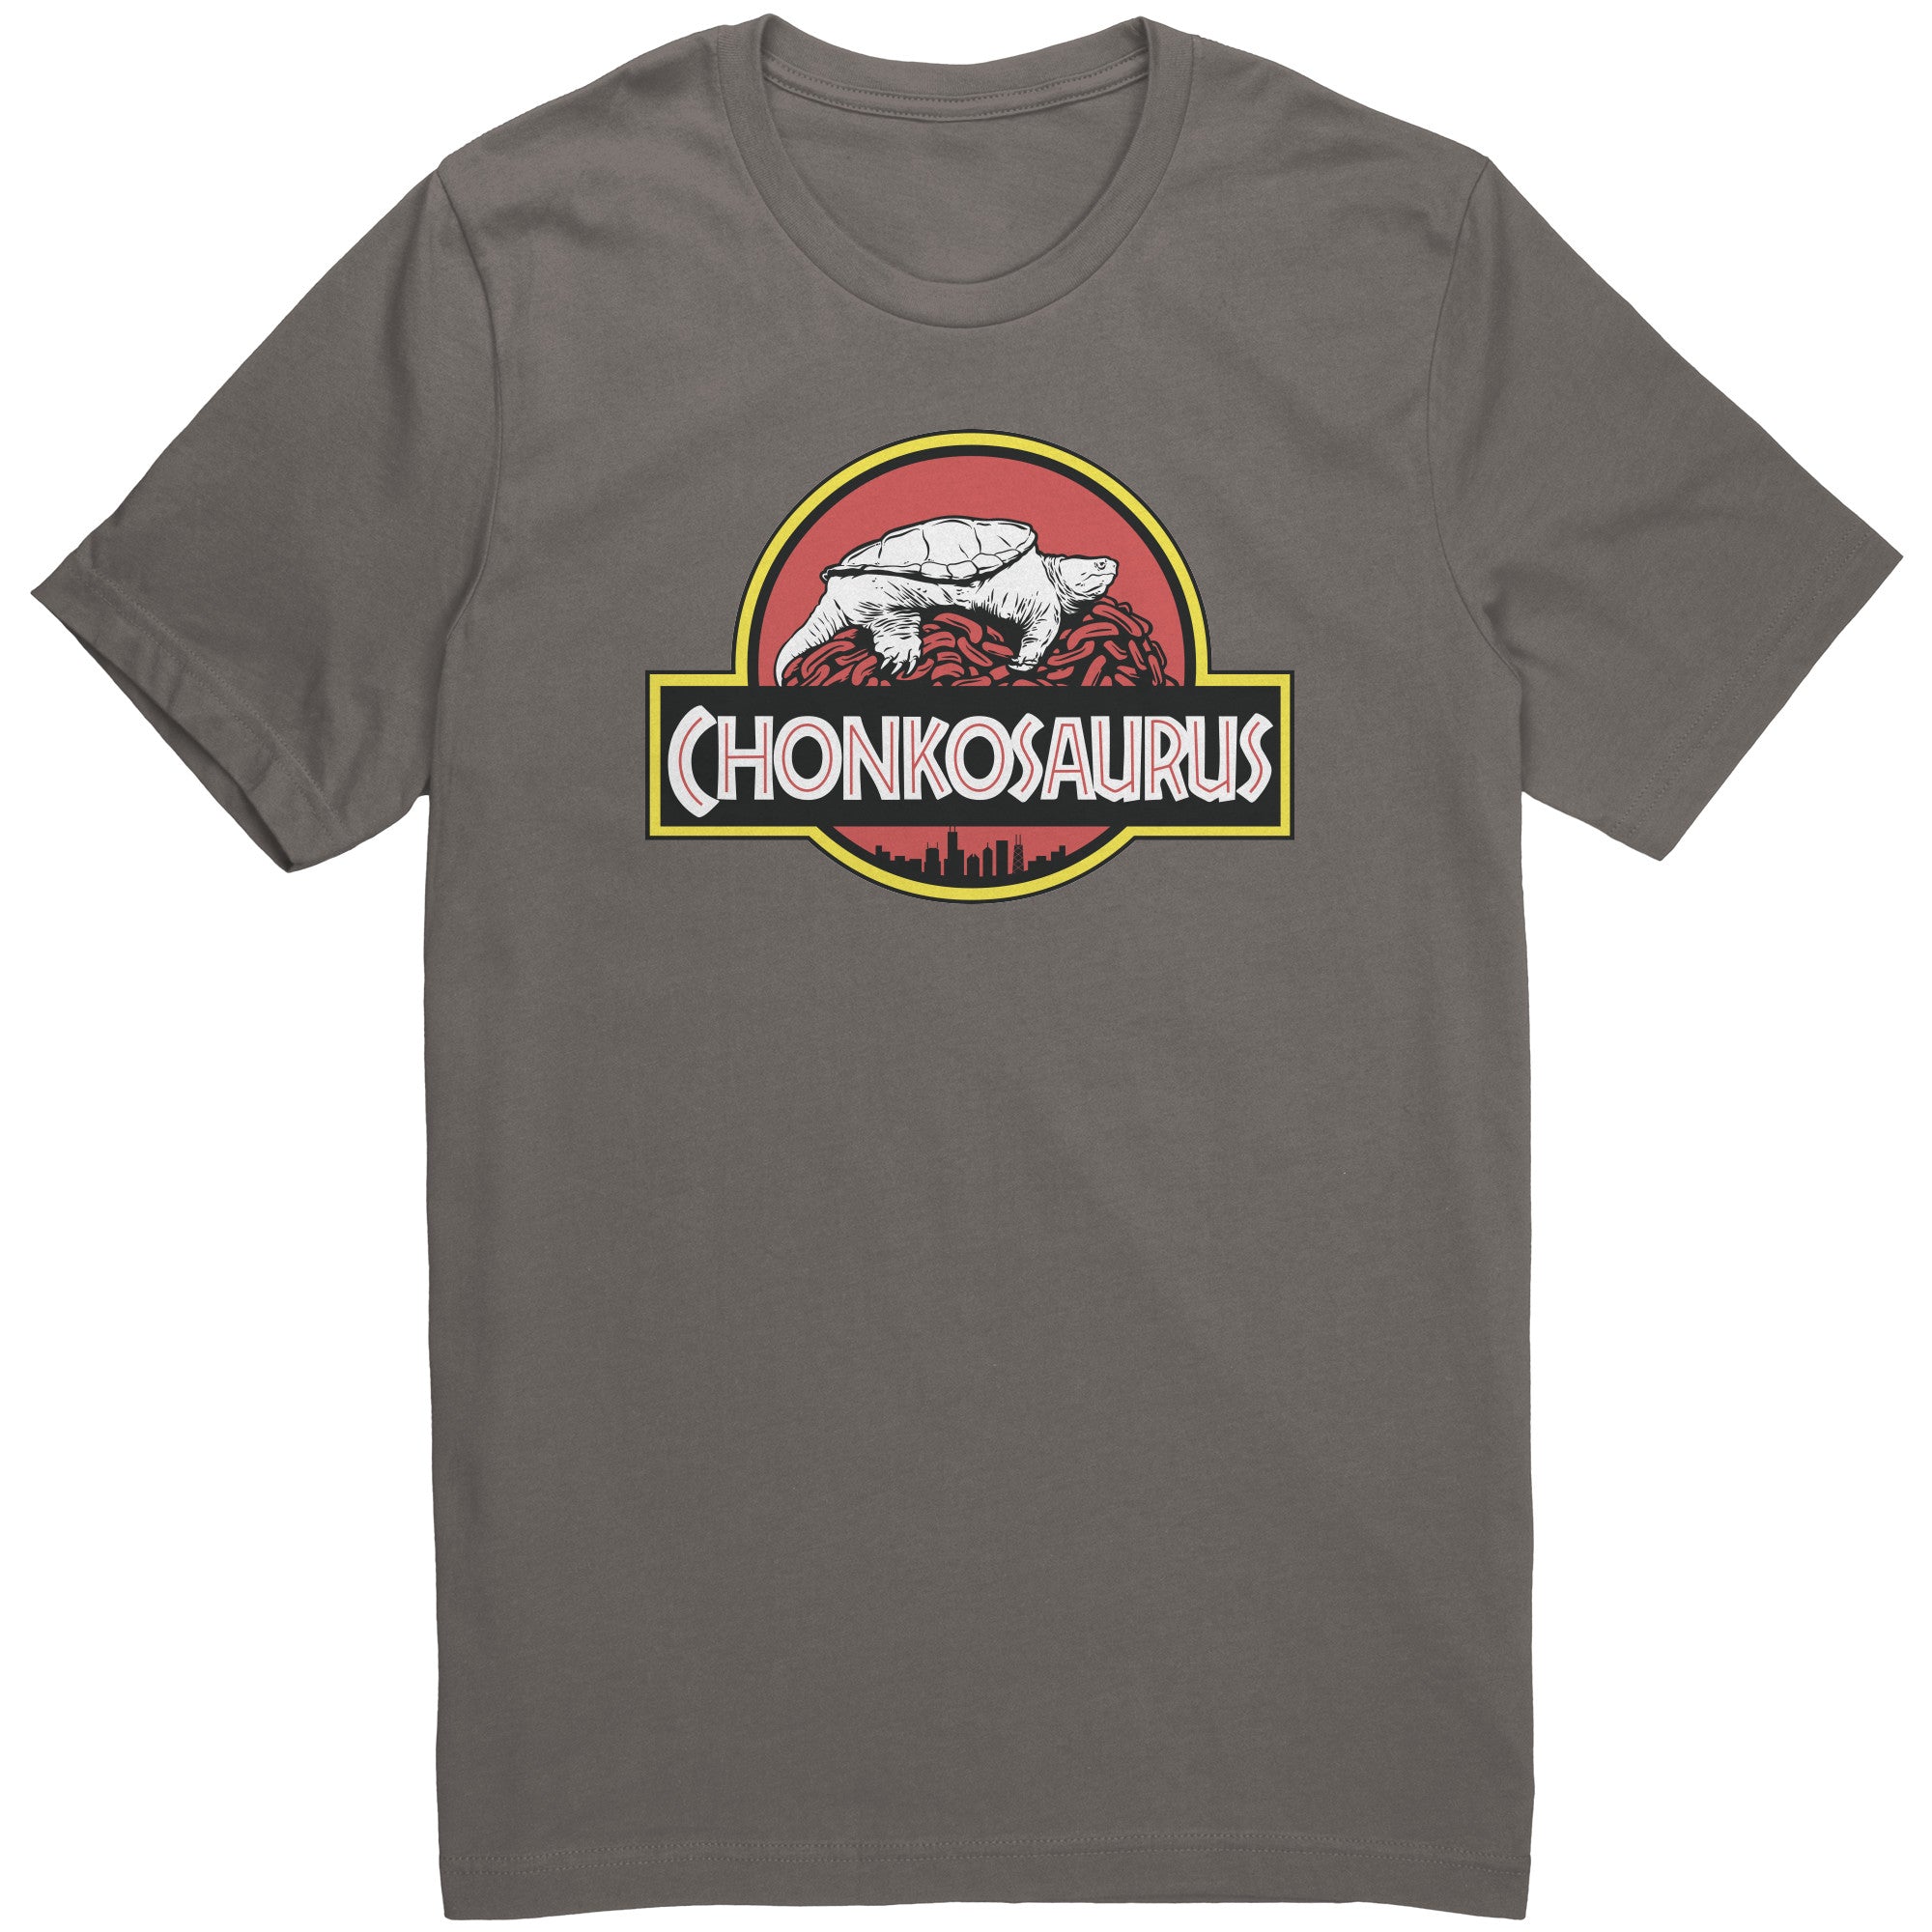 Chonkosaurus Park – Harebrained